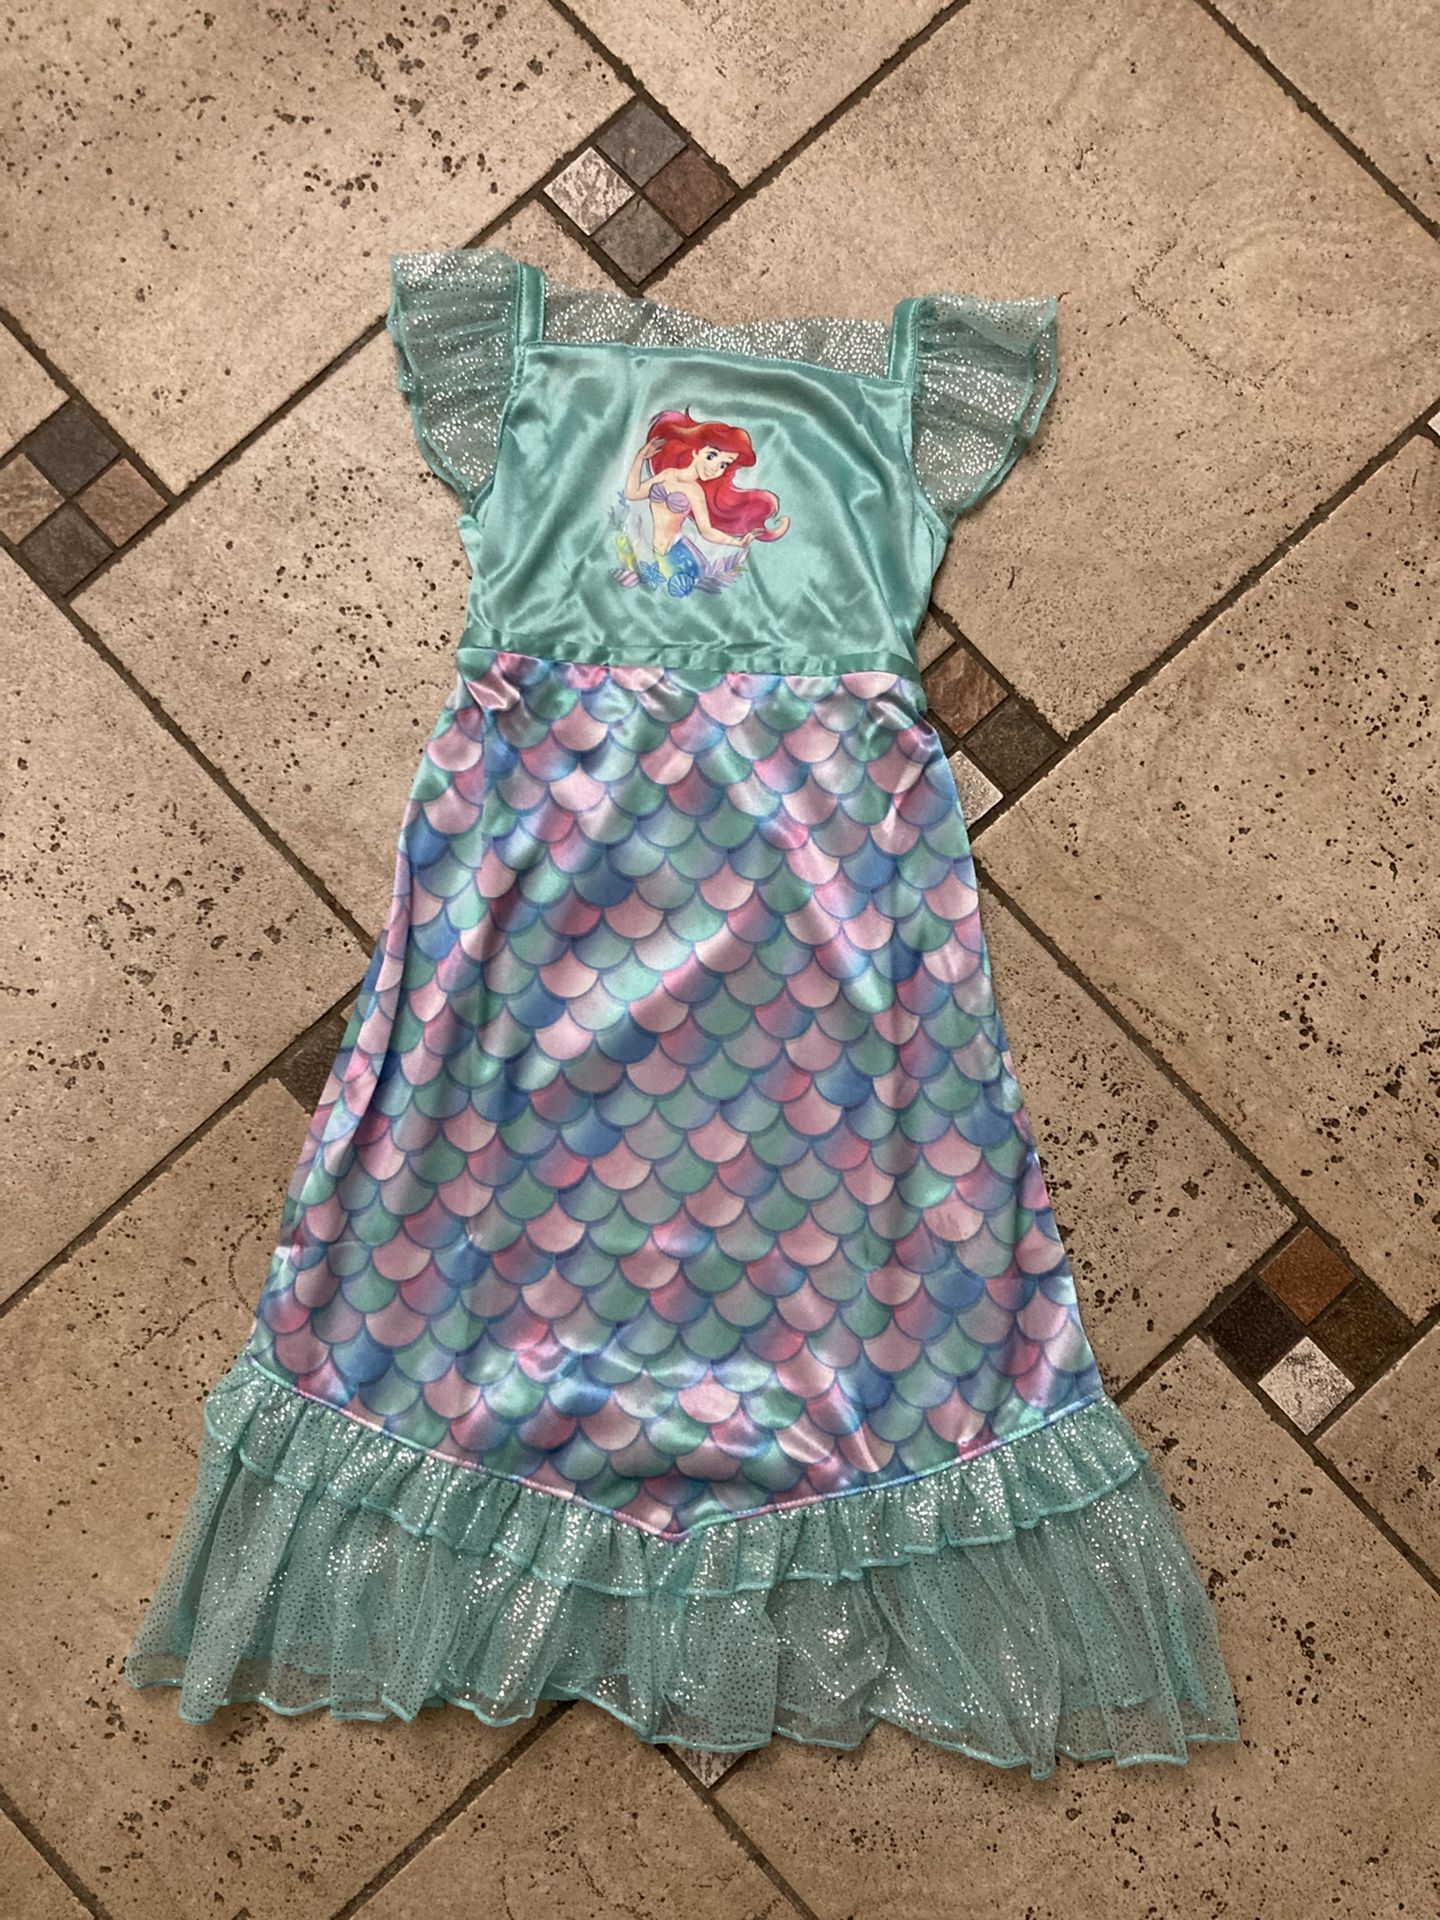 NWT Licensed Disney Mermaid Gown Dress size 6